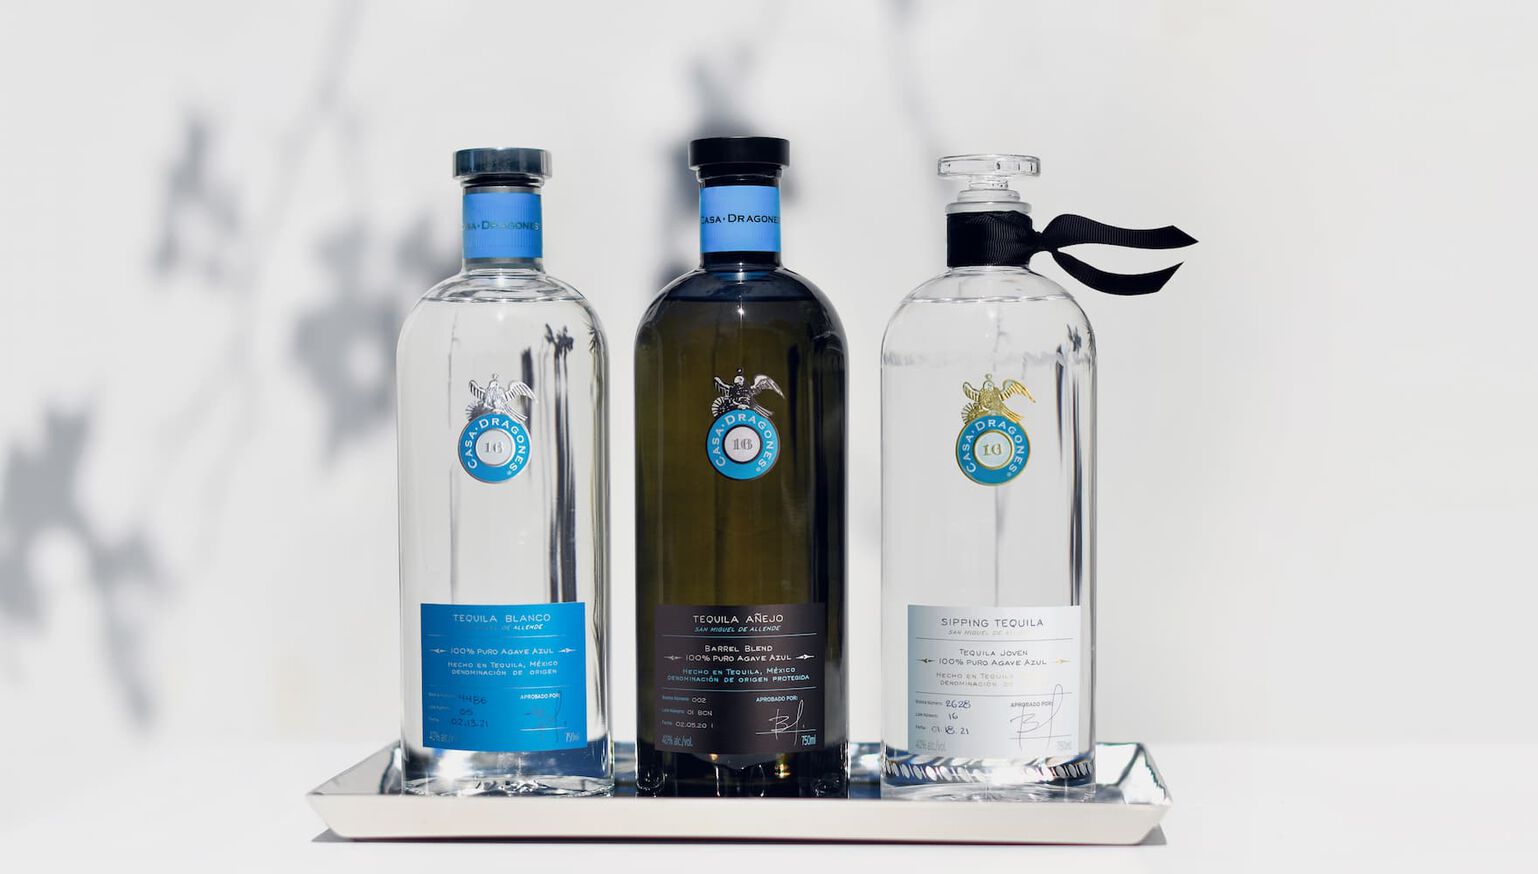 Image of 3 bottles of Casa Dragones against a white background